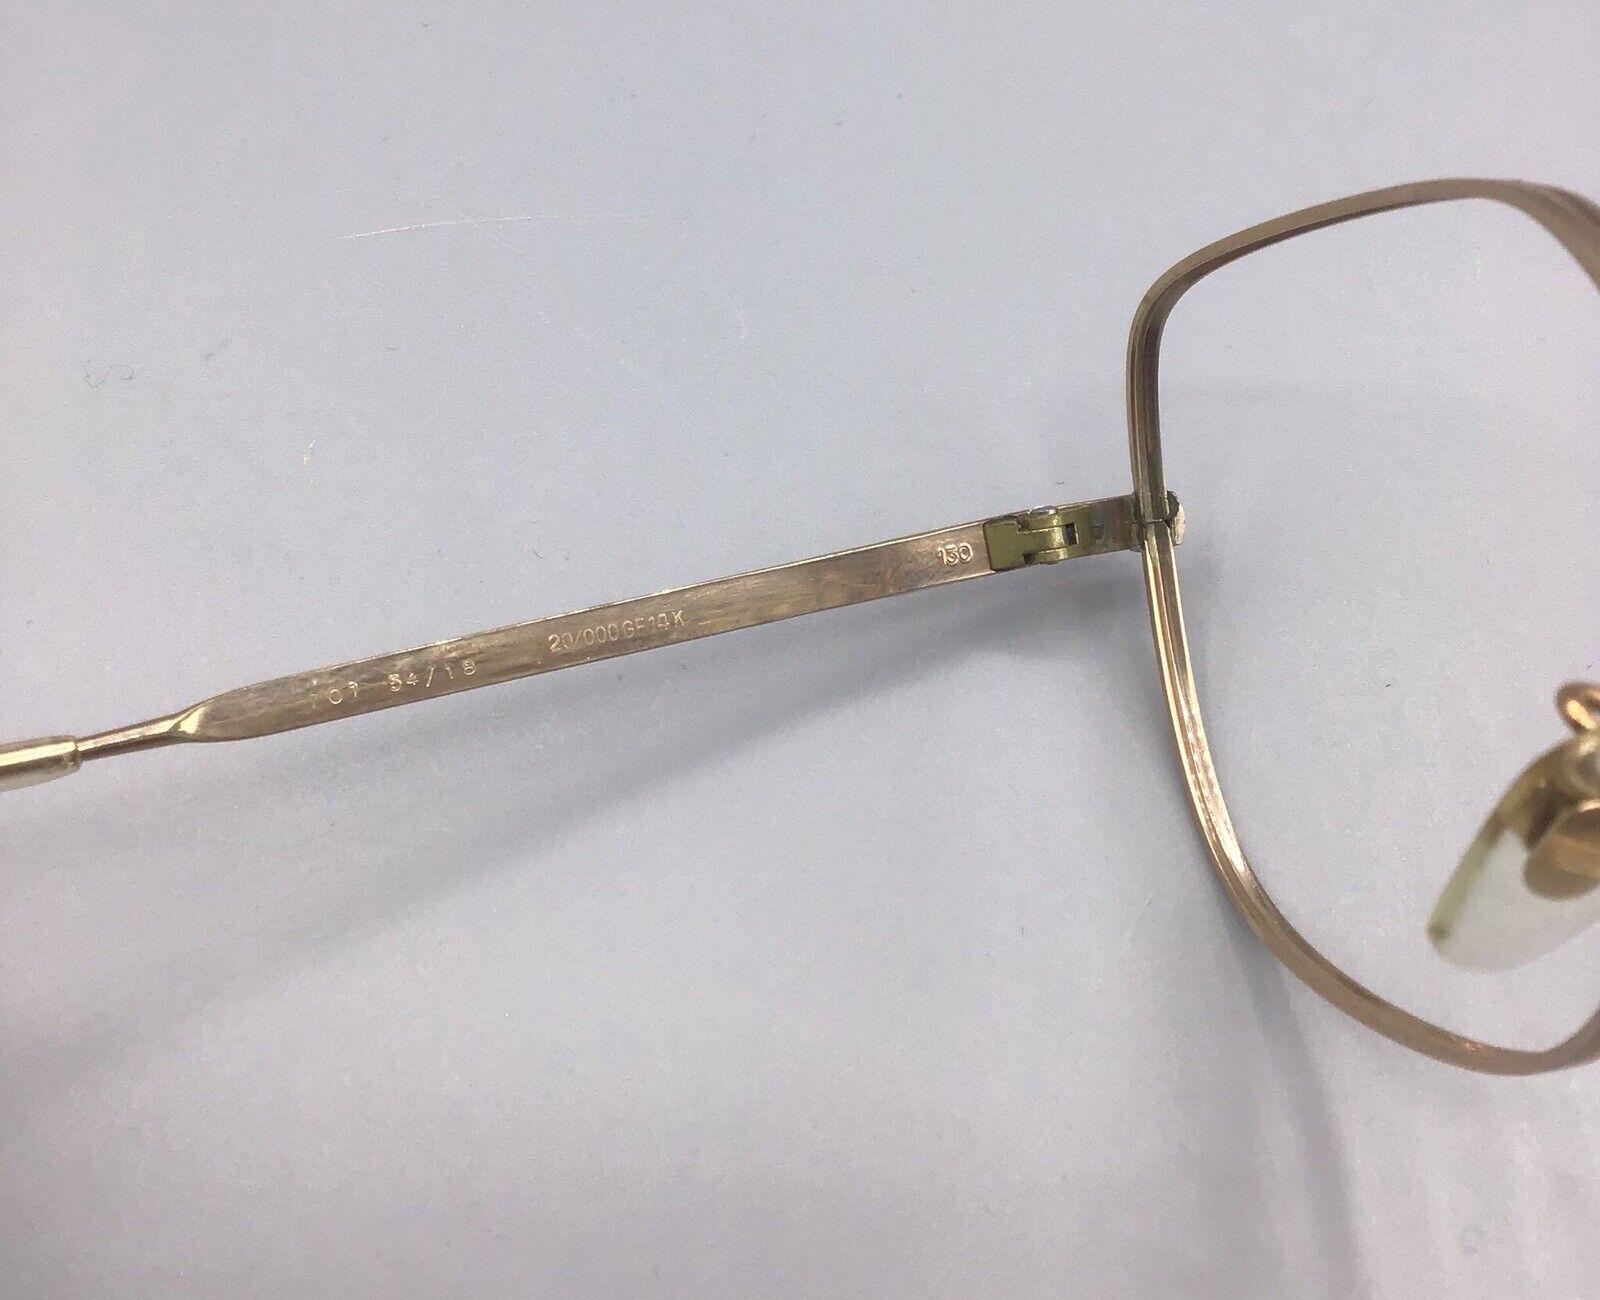 Marcolin occhiale vintage eyewear gold 20/000GF14K gold filled brillen lunettes